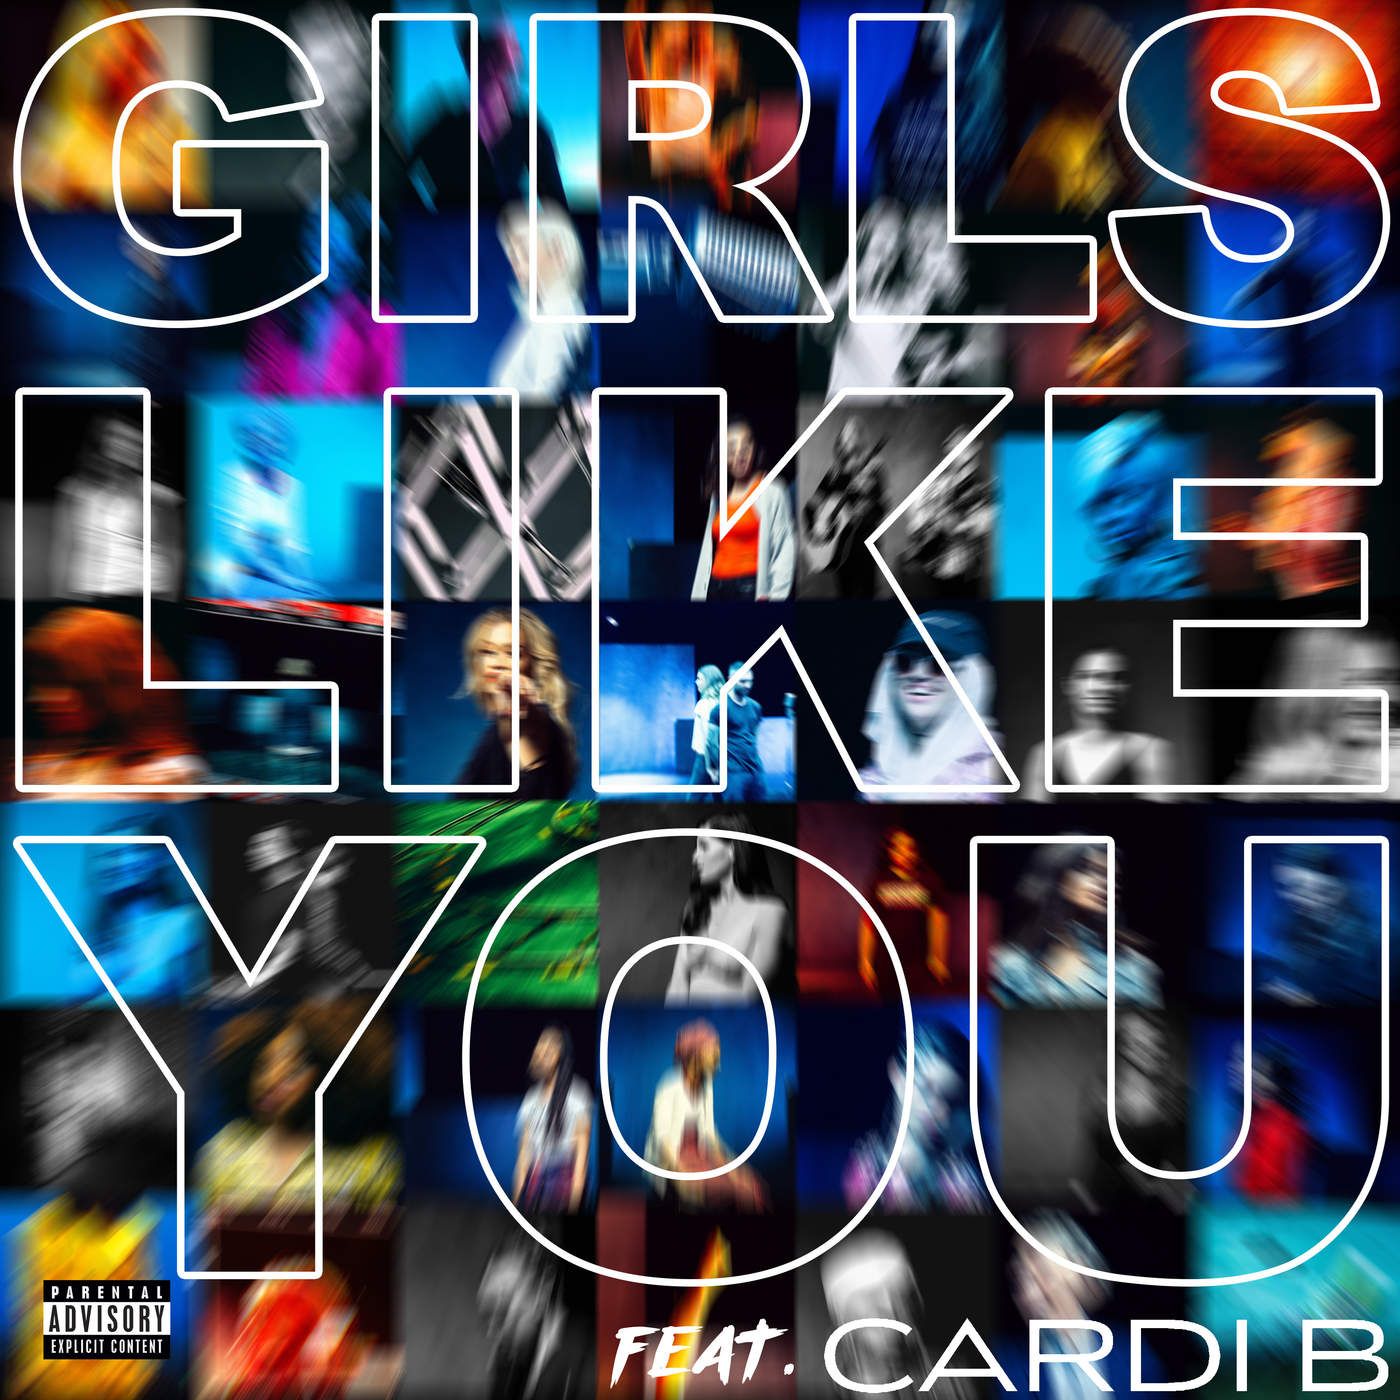 Maroon 5 feat. Cardi B: Girls Like You (Video 2018)